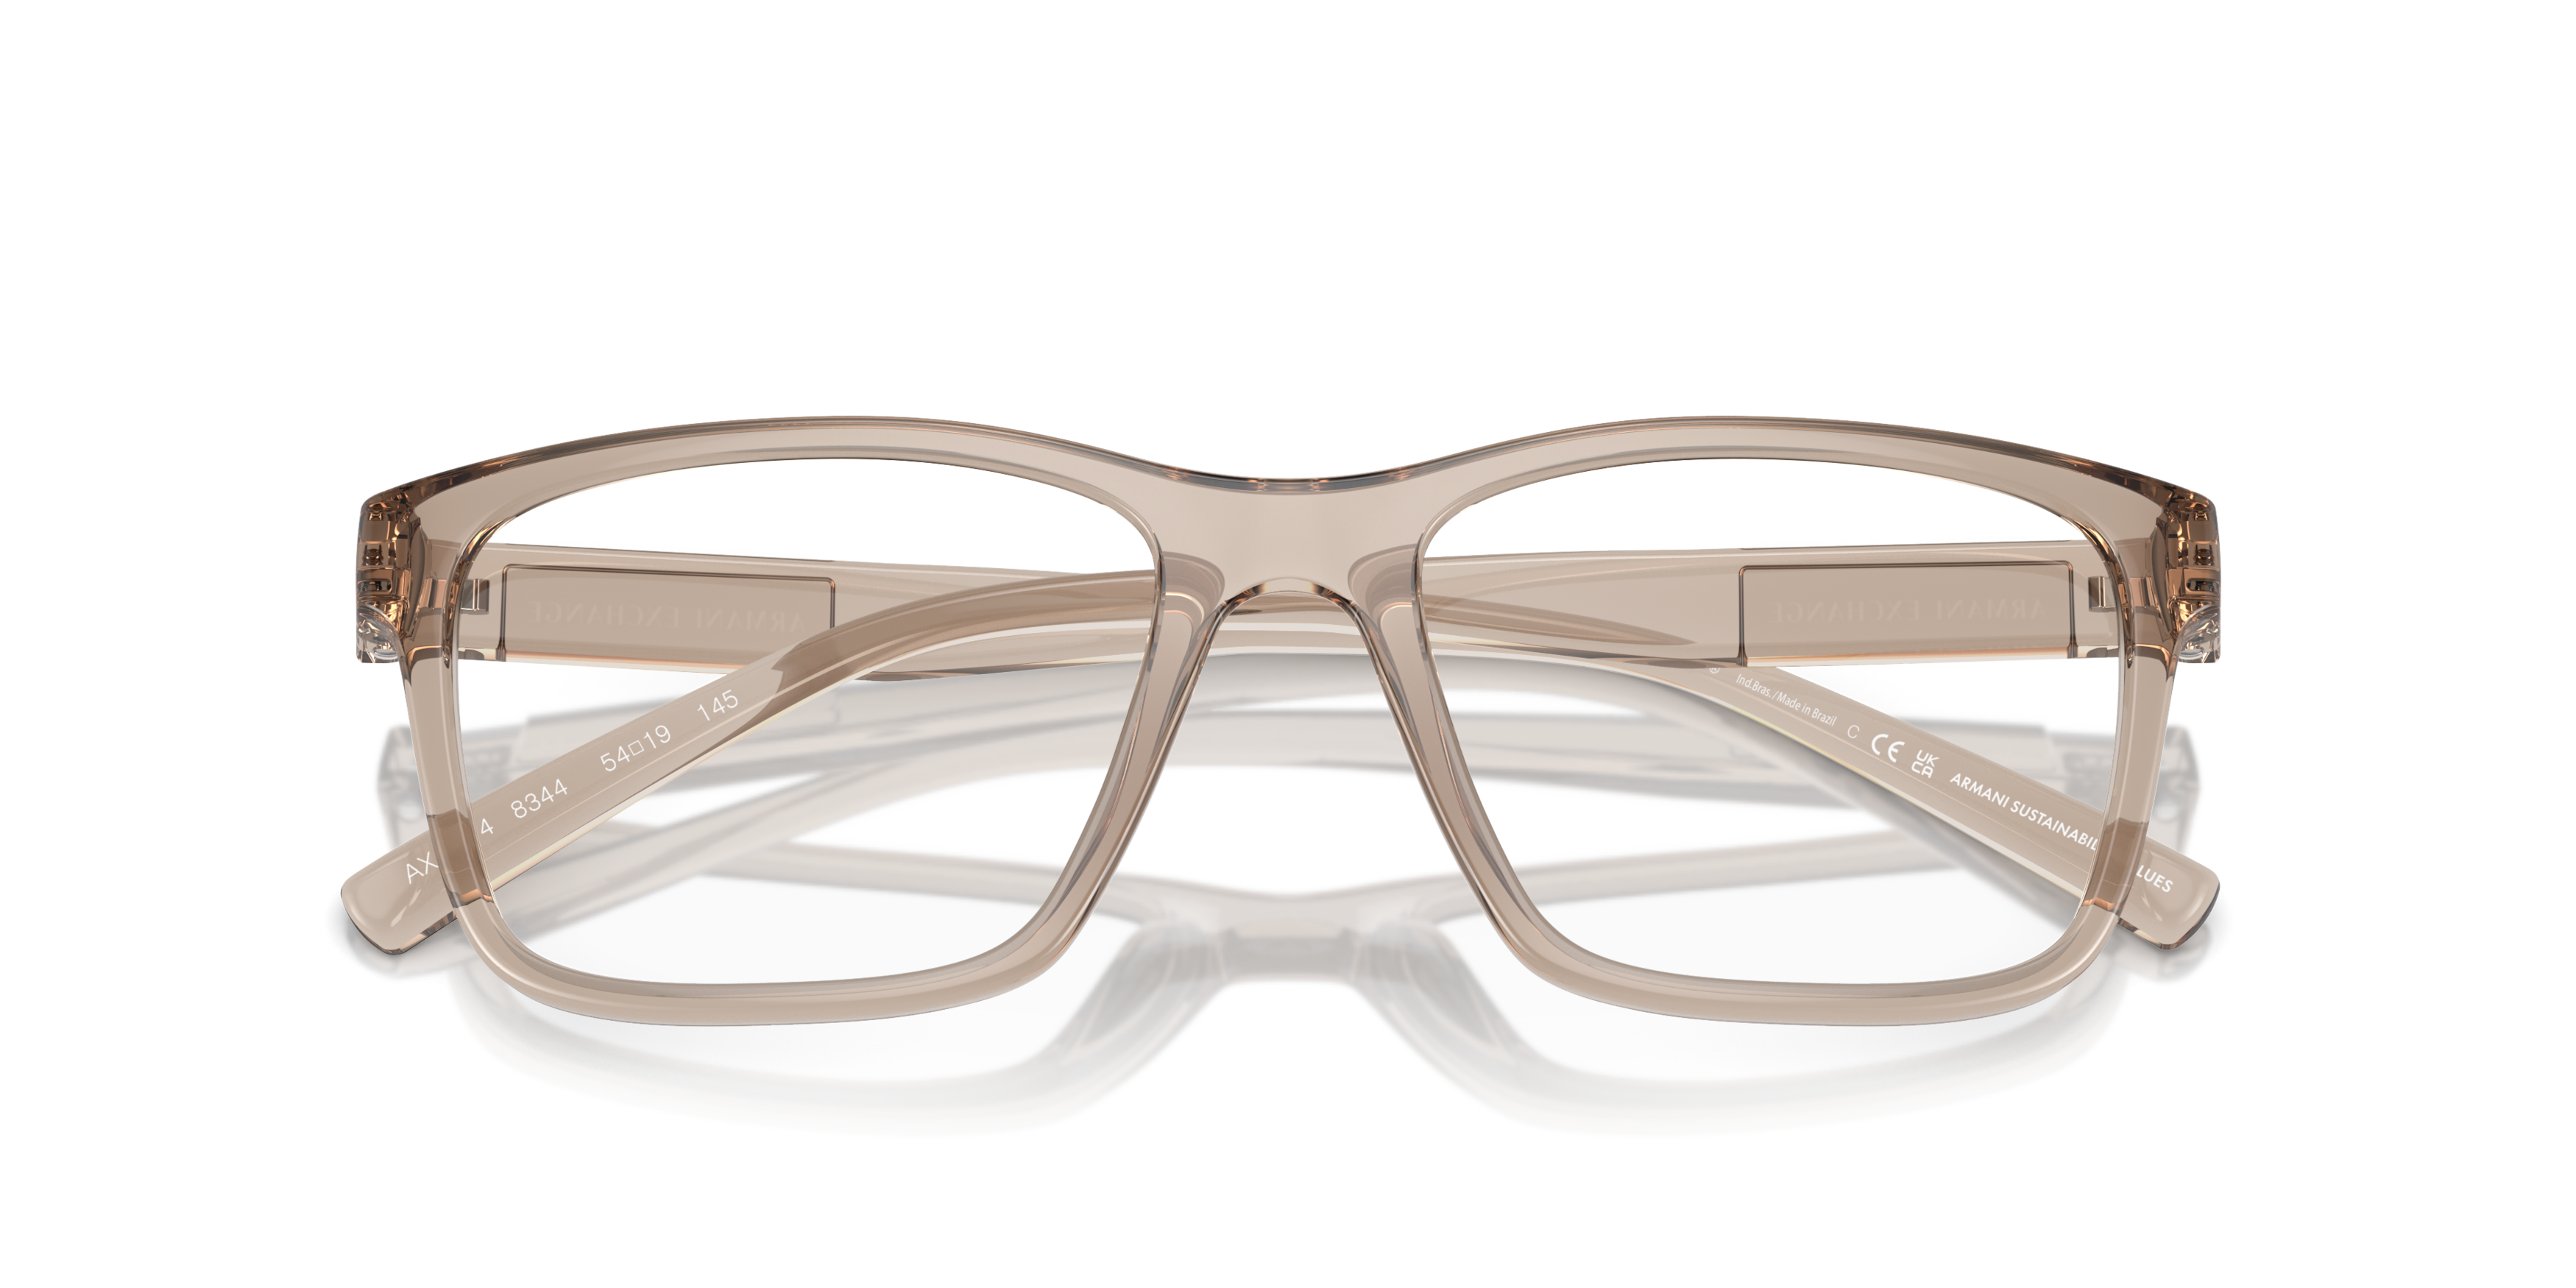 Folded Armani Exchange AX 3114 Glasses Transparent / Black